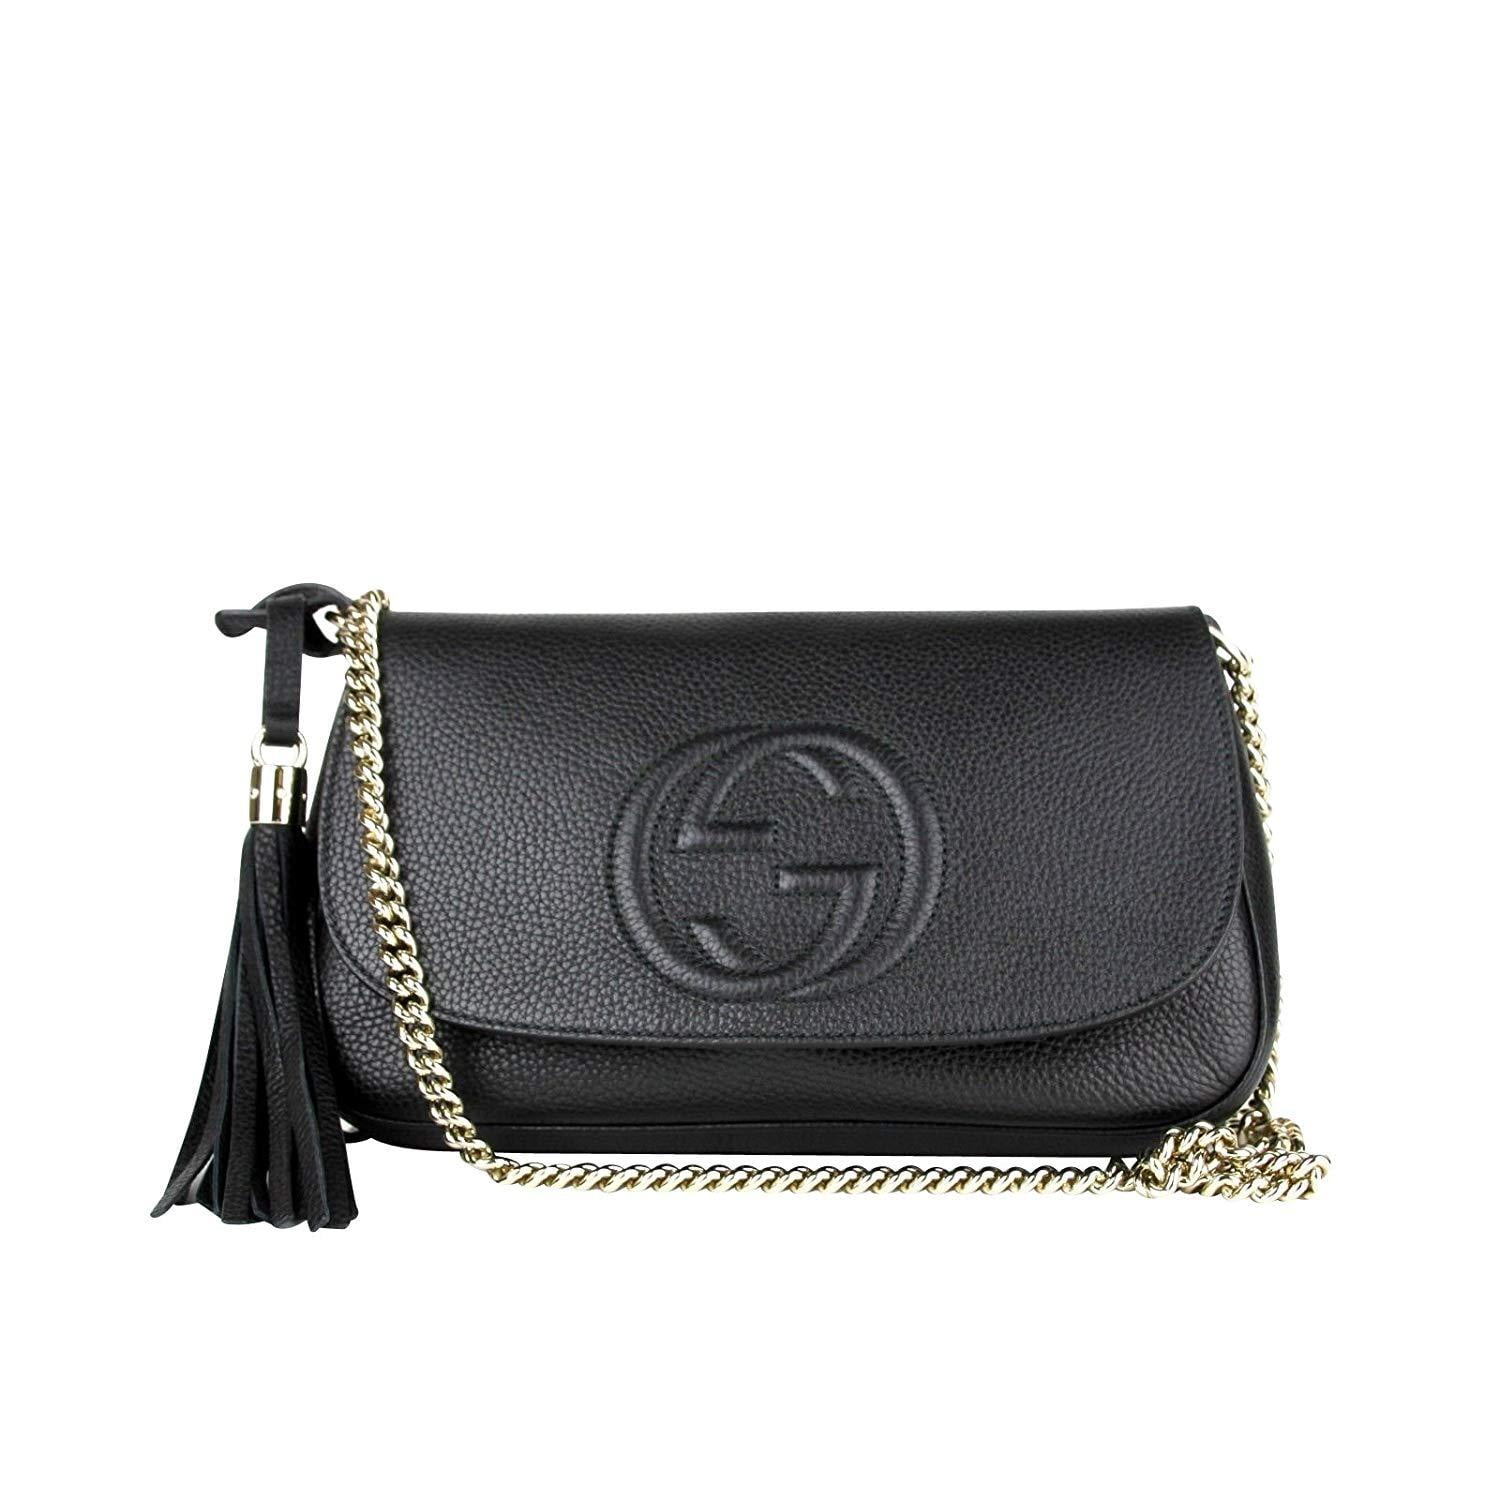 Gucci Interlocking GG Black Leather Chain Strap Flap Shoulder Bag ...